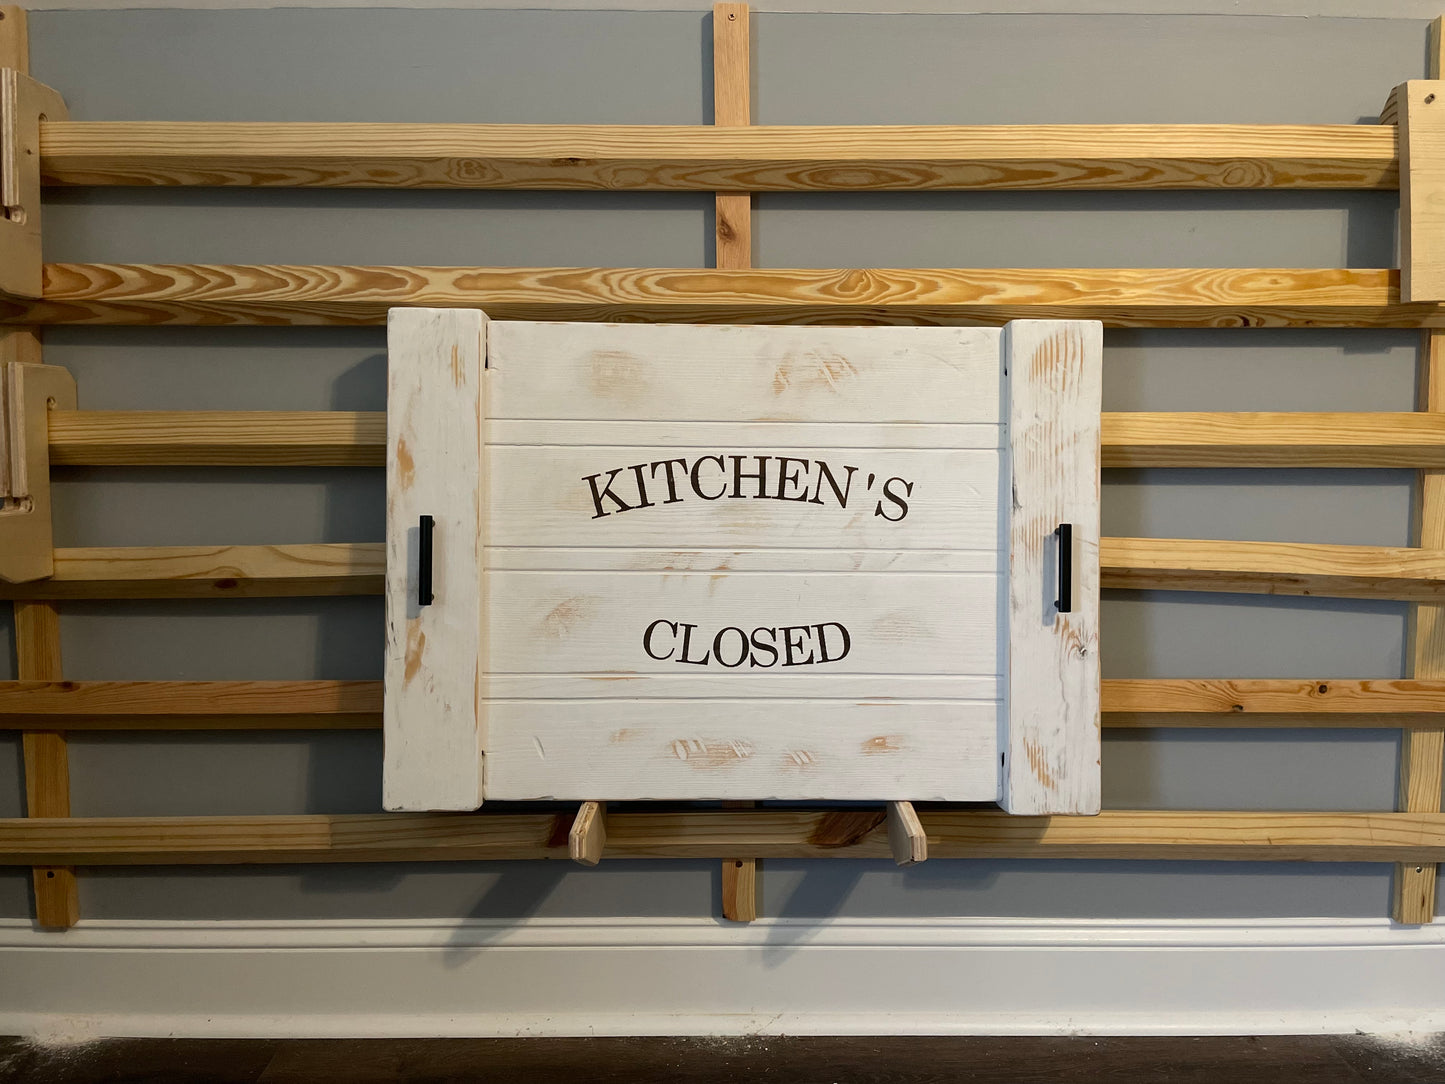 “Kitchen’s Closed” Stove cover